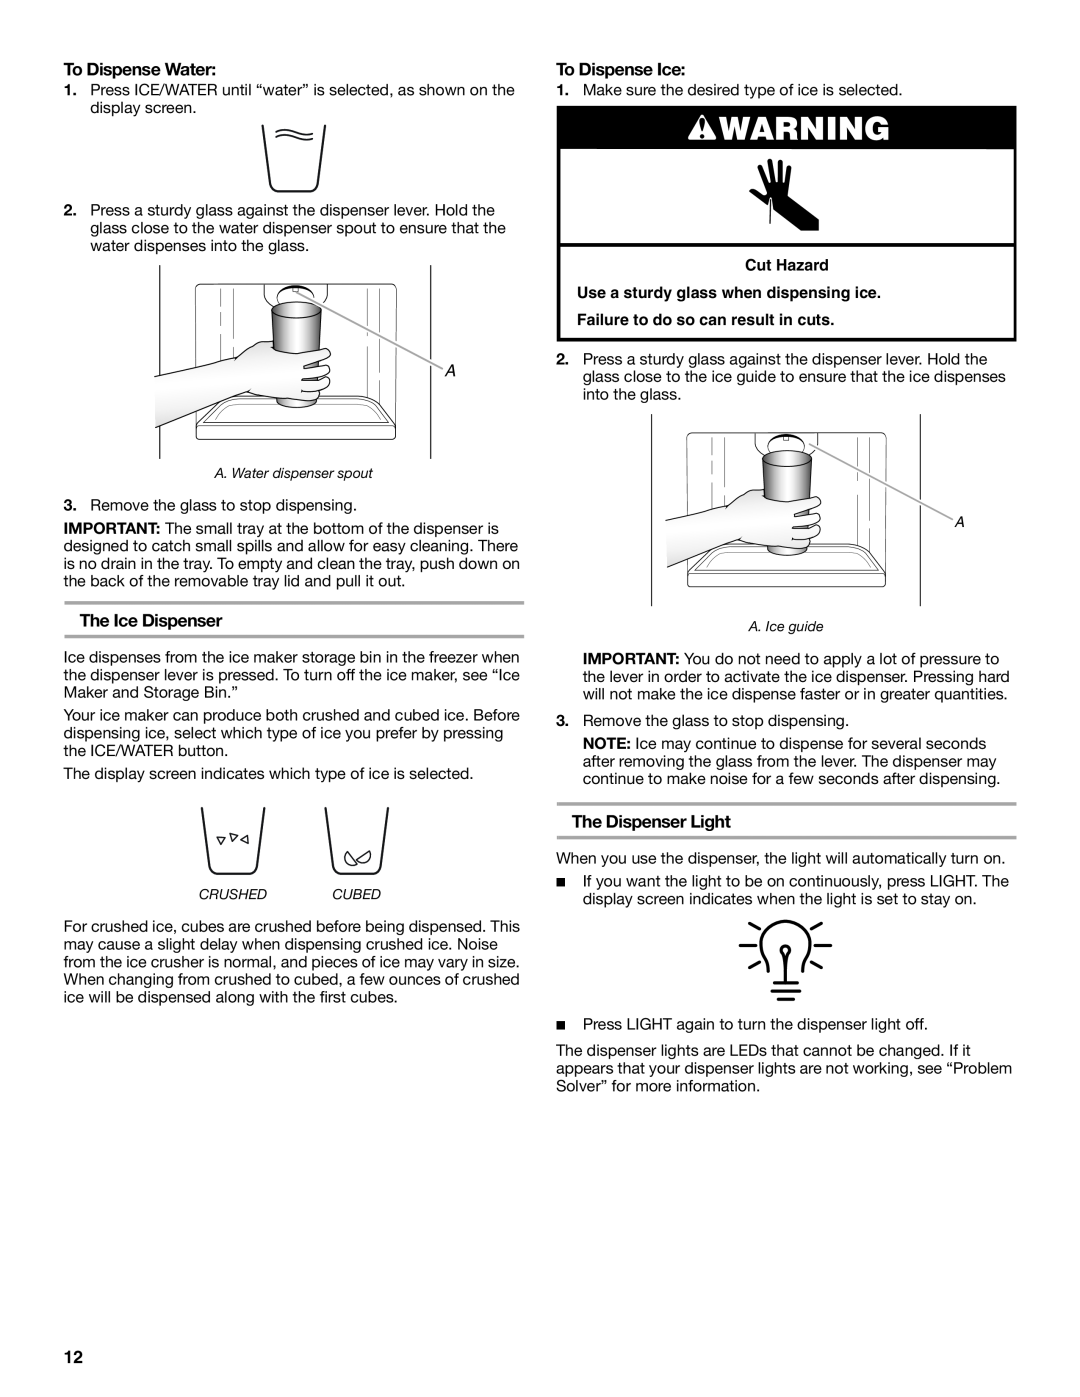 Whirlpool ED2KHAXVB installation instructions To Dispense Water, To Dispense Ice, The Ice Dispenser, The Dispenser Light 